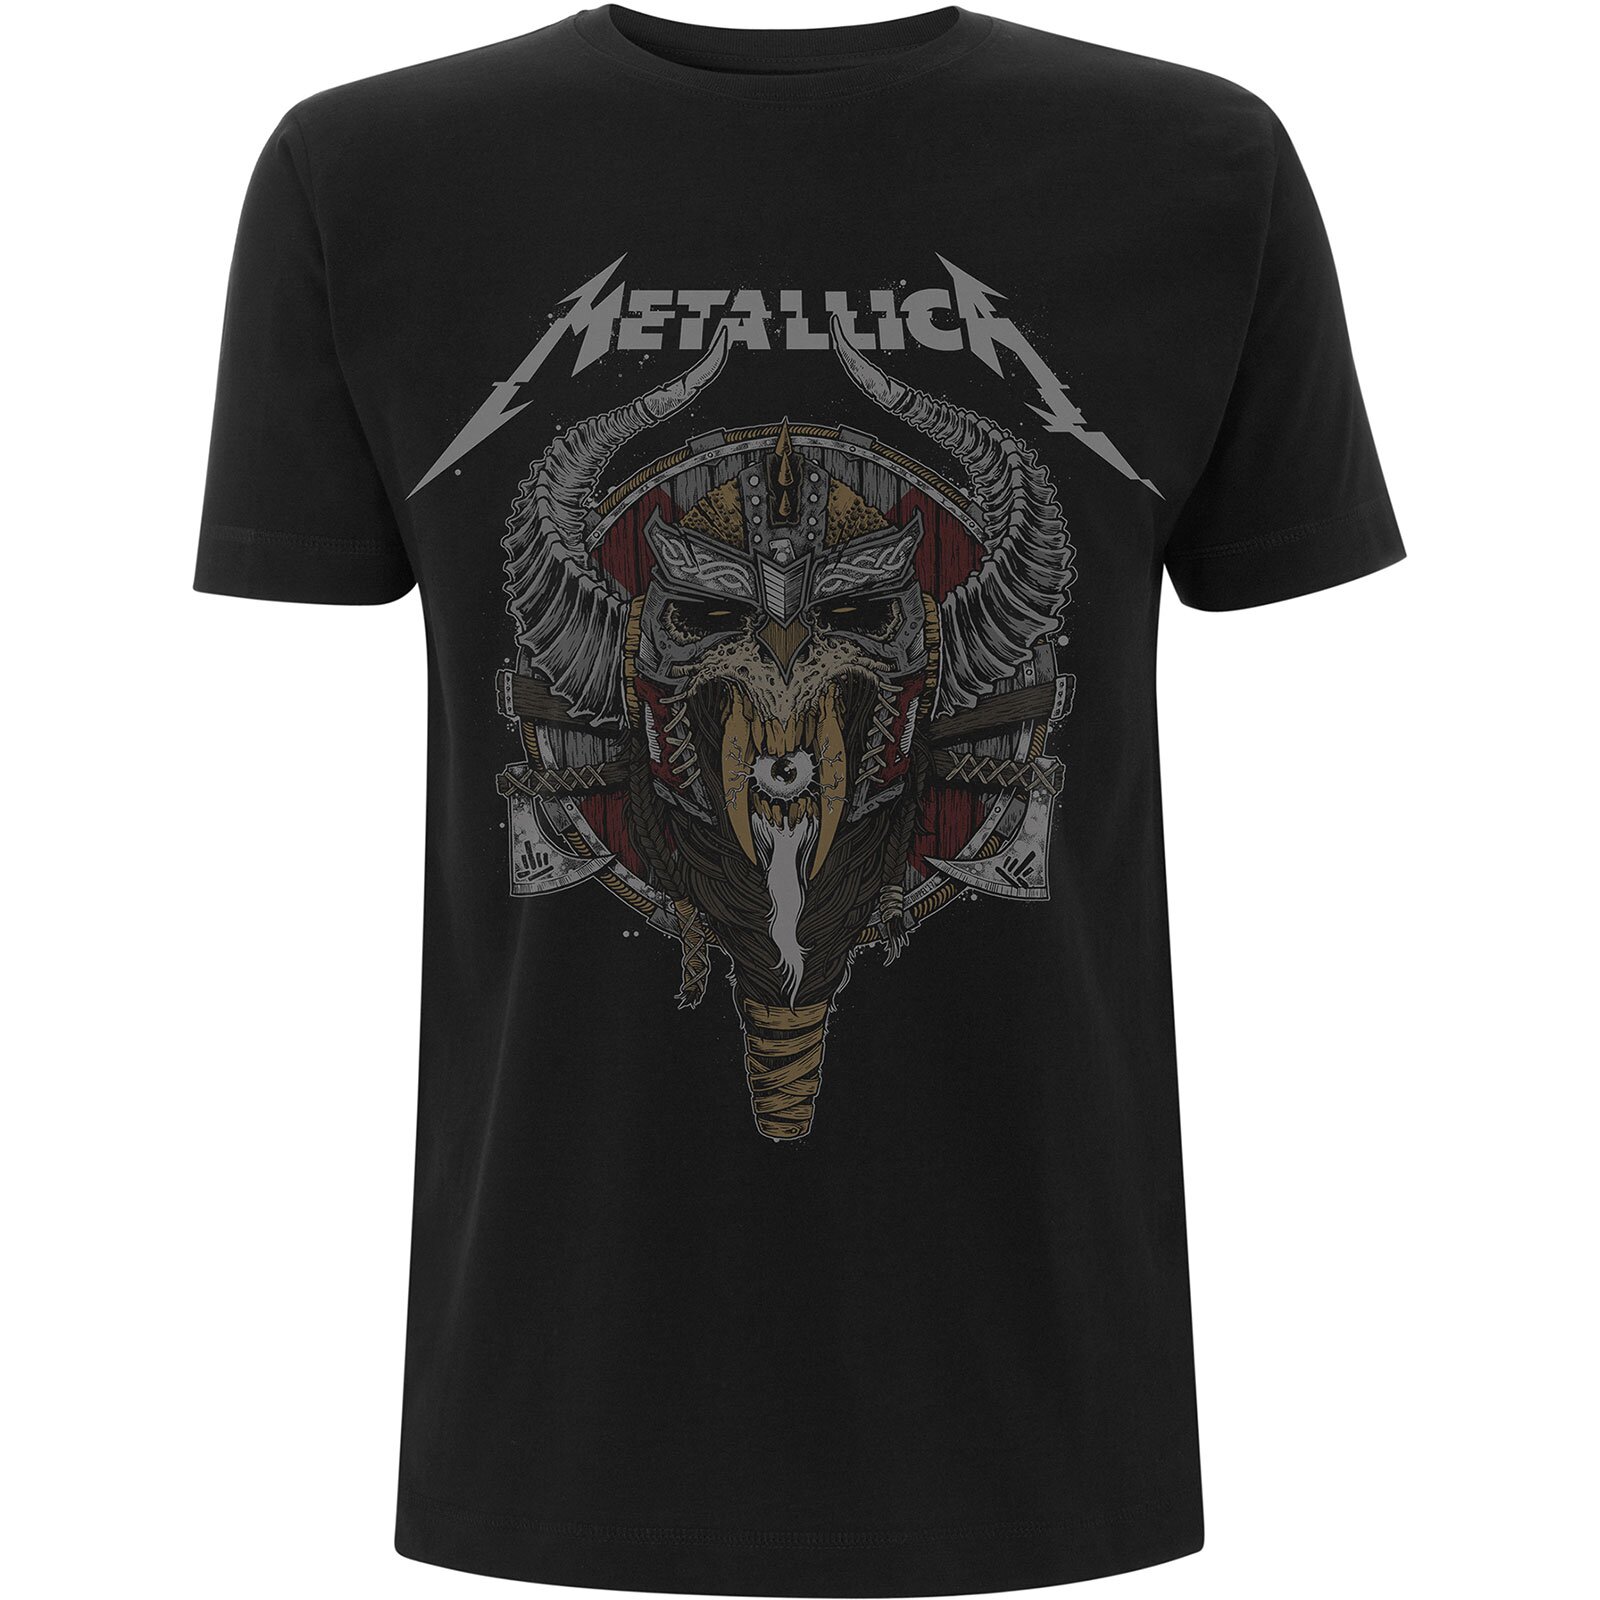 Rockoff T-Shirt Metallica Viking Size M : photo 1